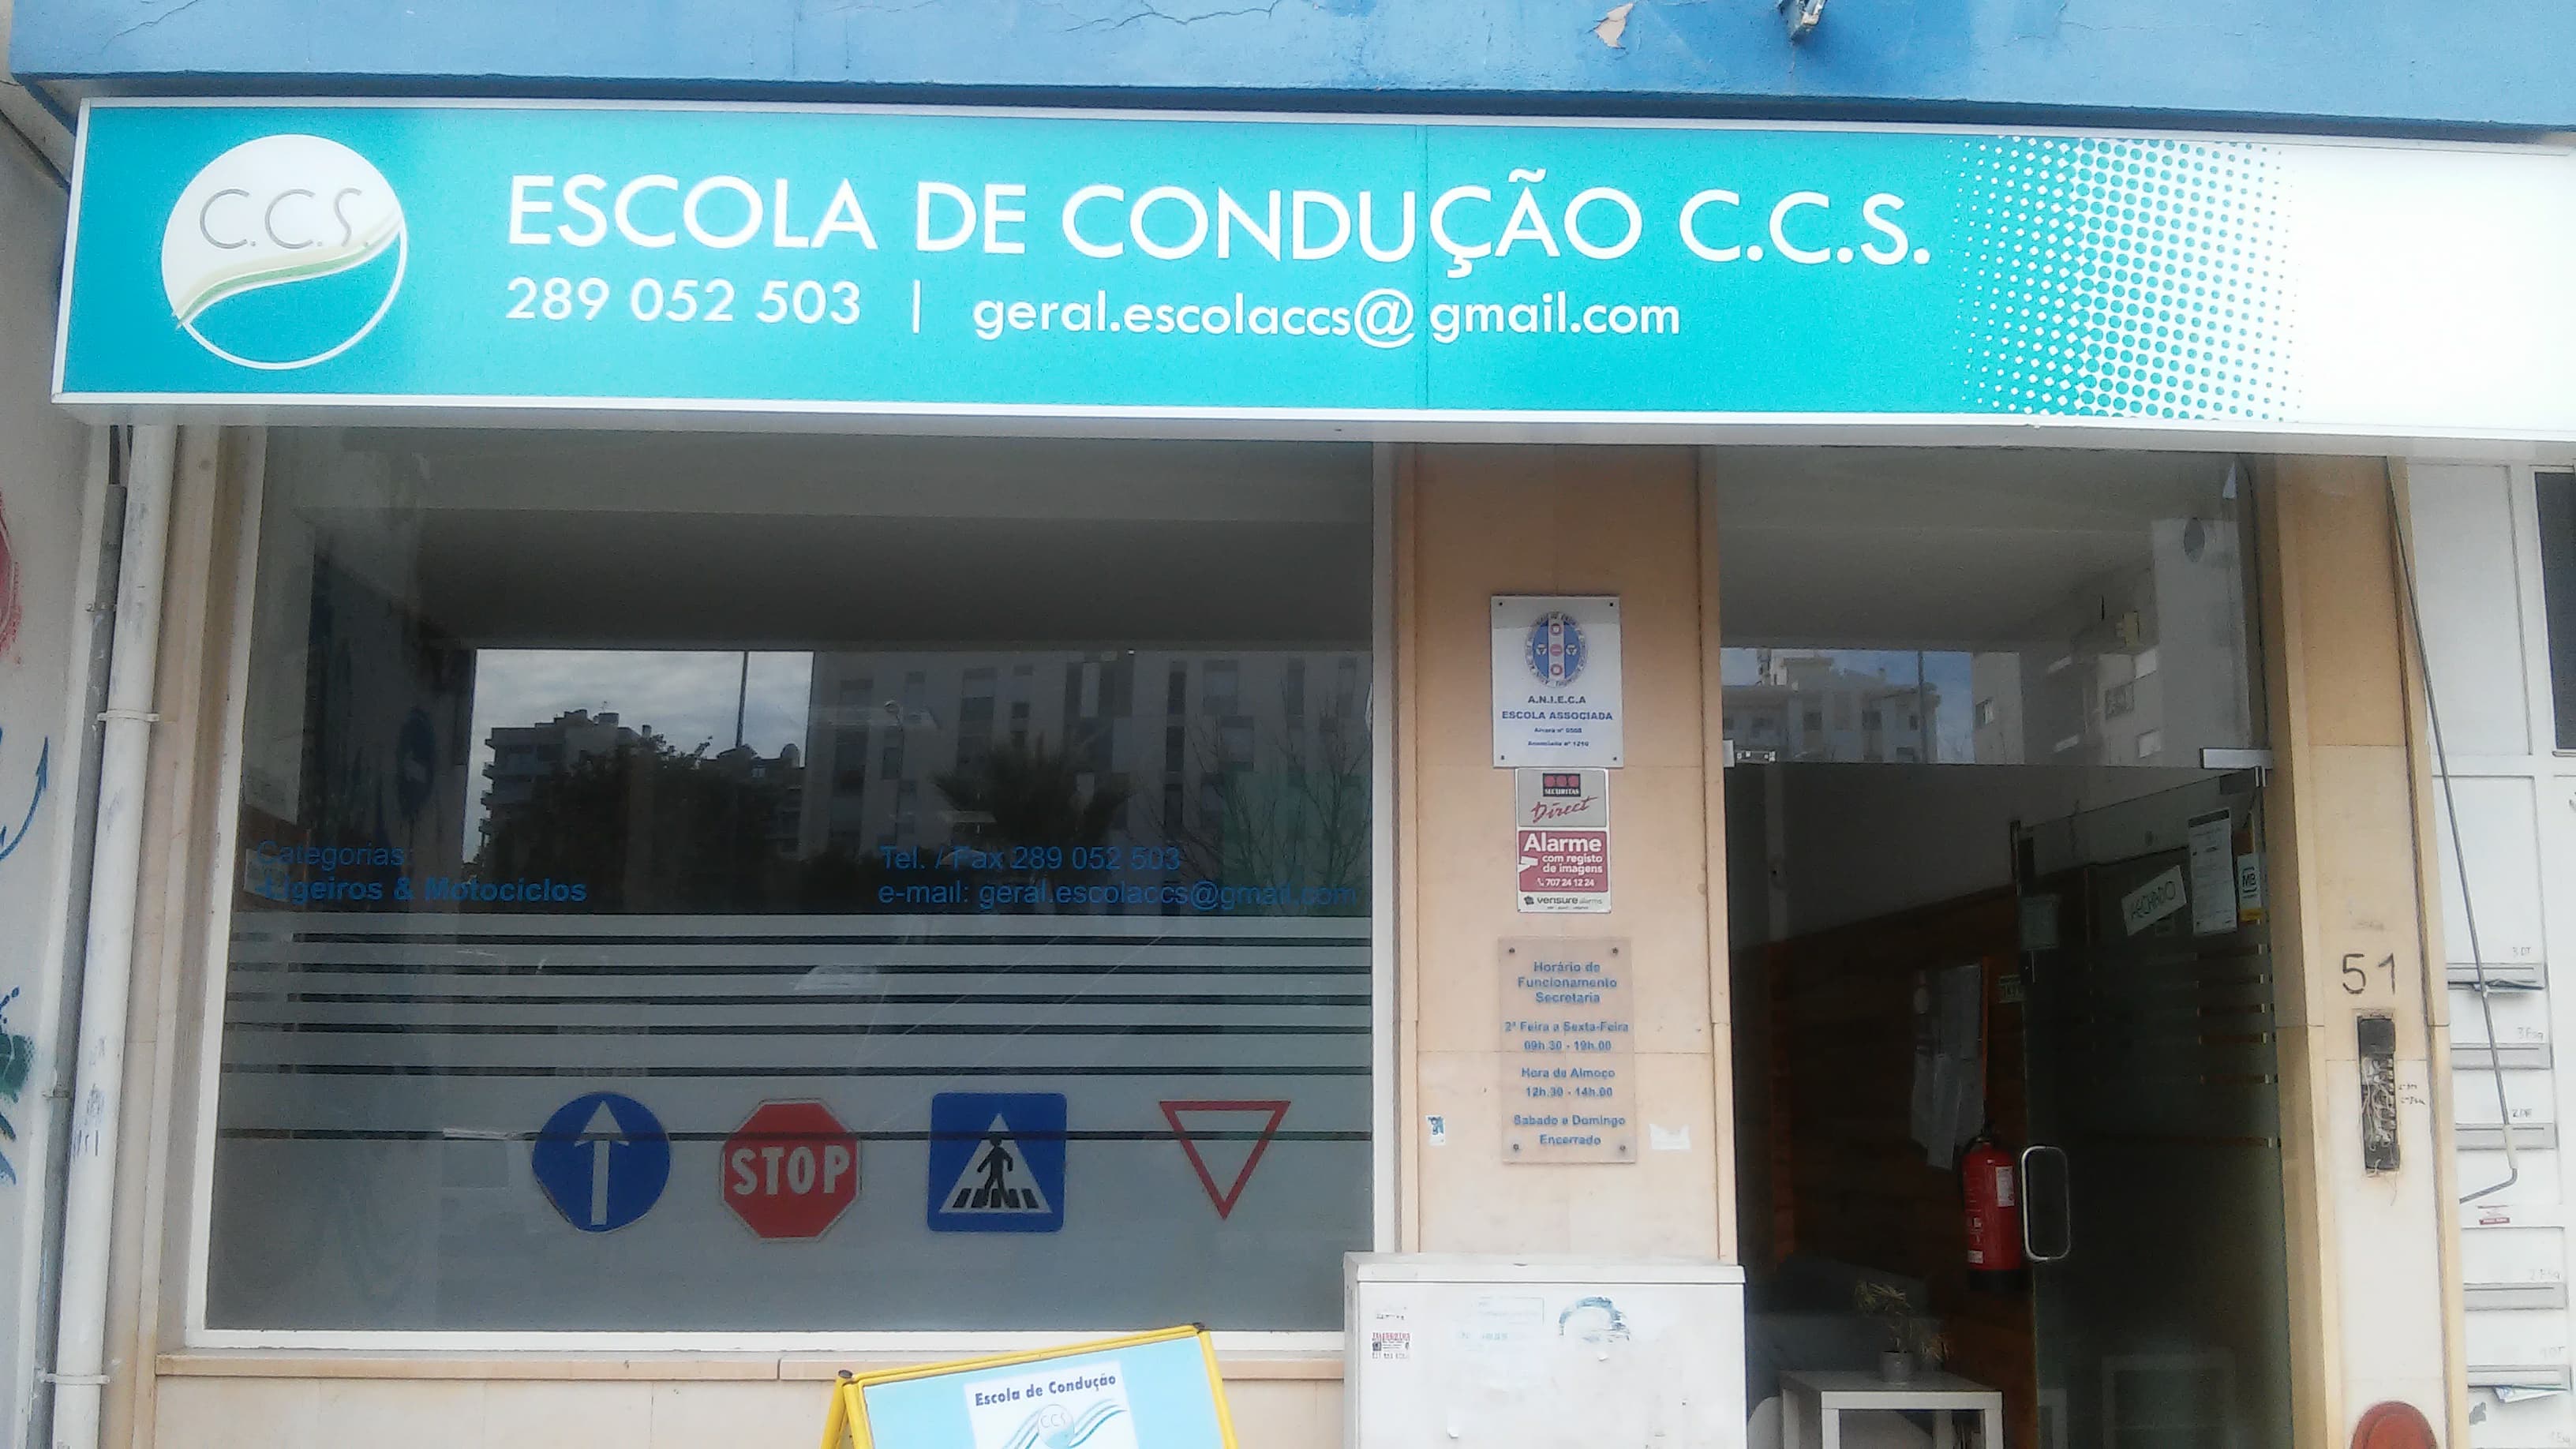 Escola Conducao CCS image